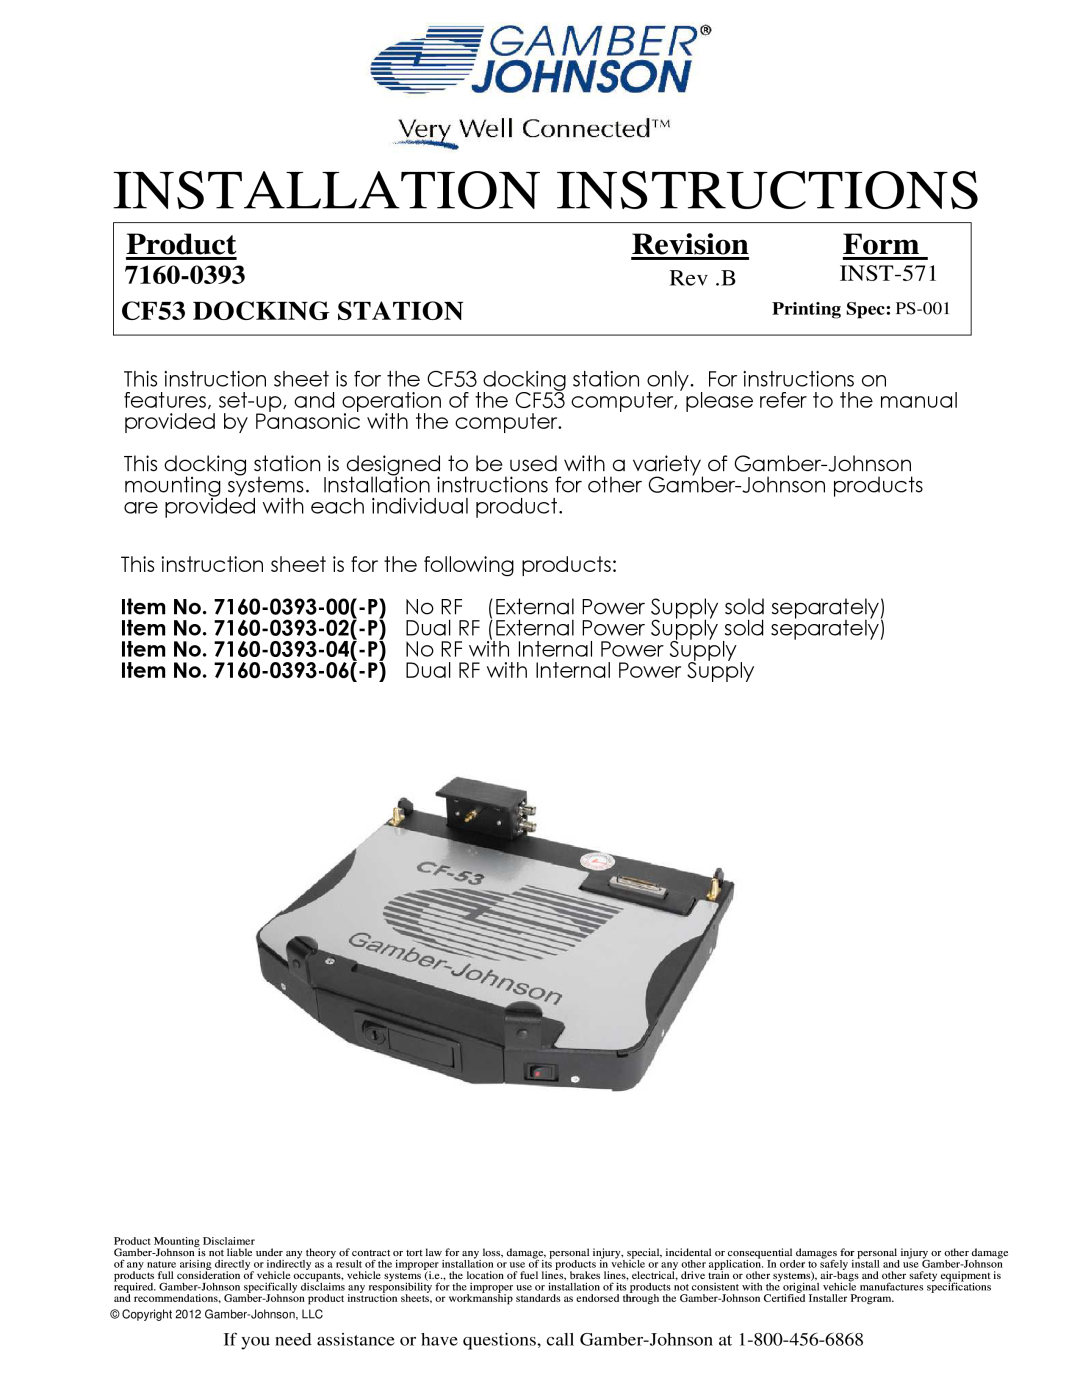 Gamber Johnson 7160-0393-02(-P) installation instructions Installation Instructions, Product, Revision, Form, Rev .B 